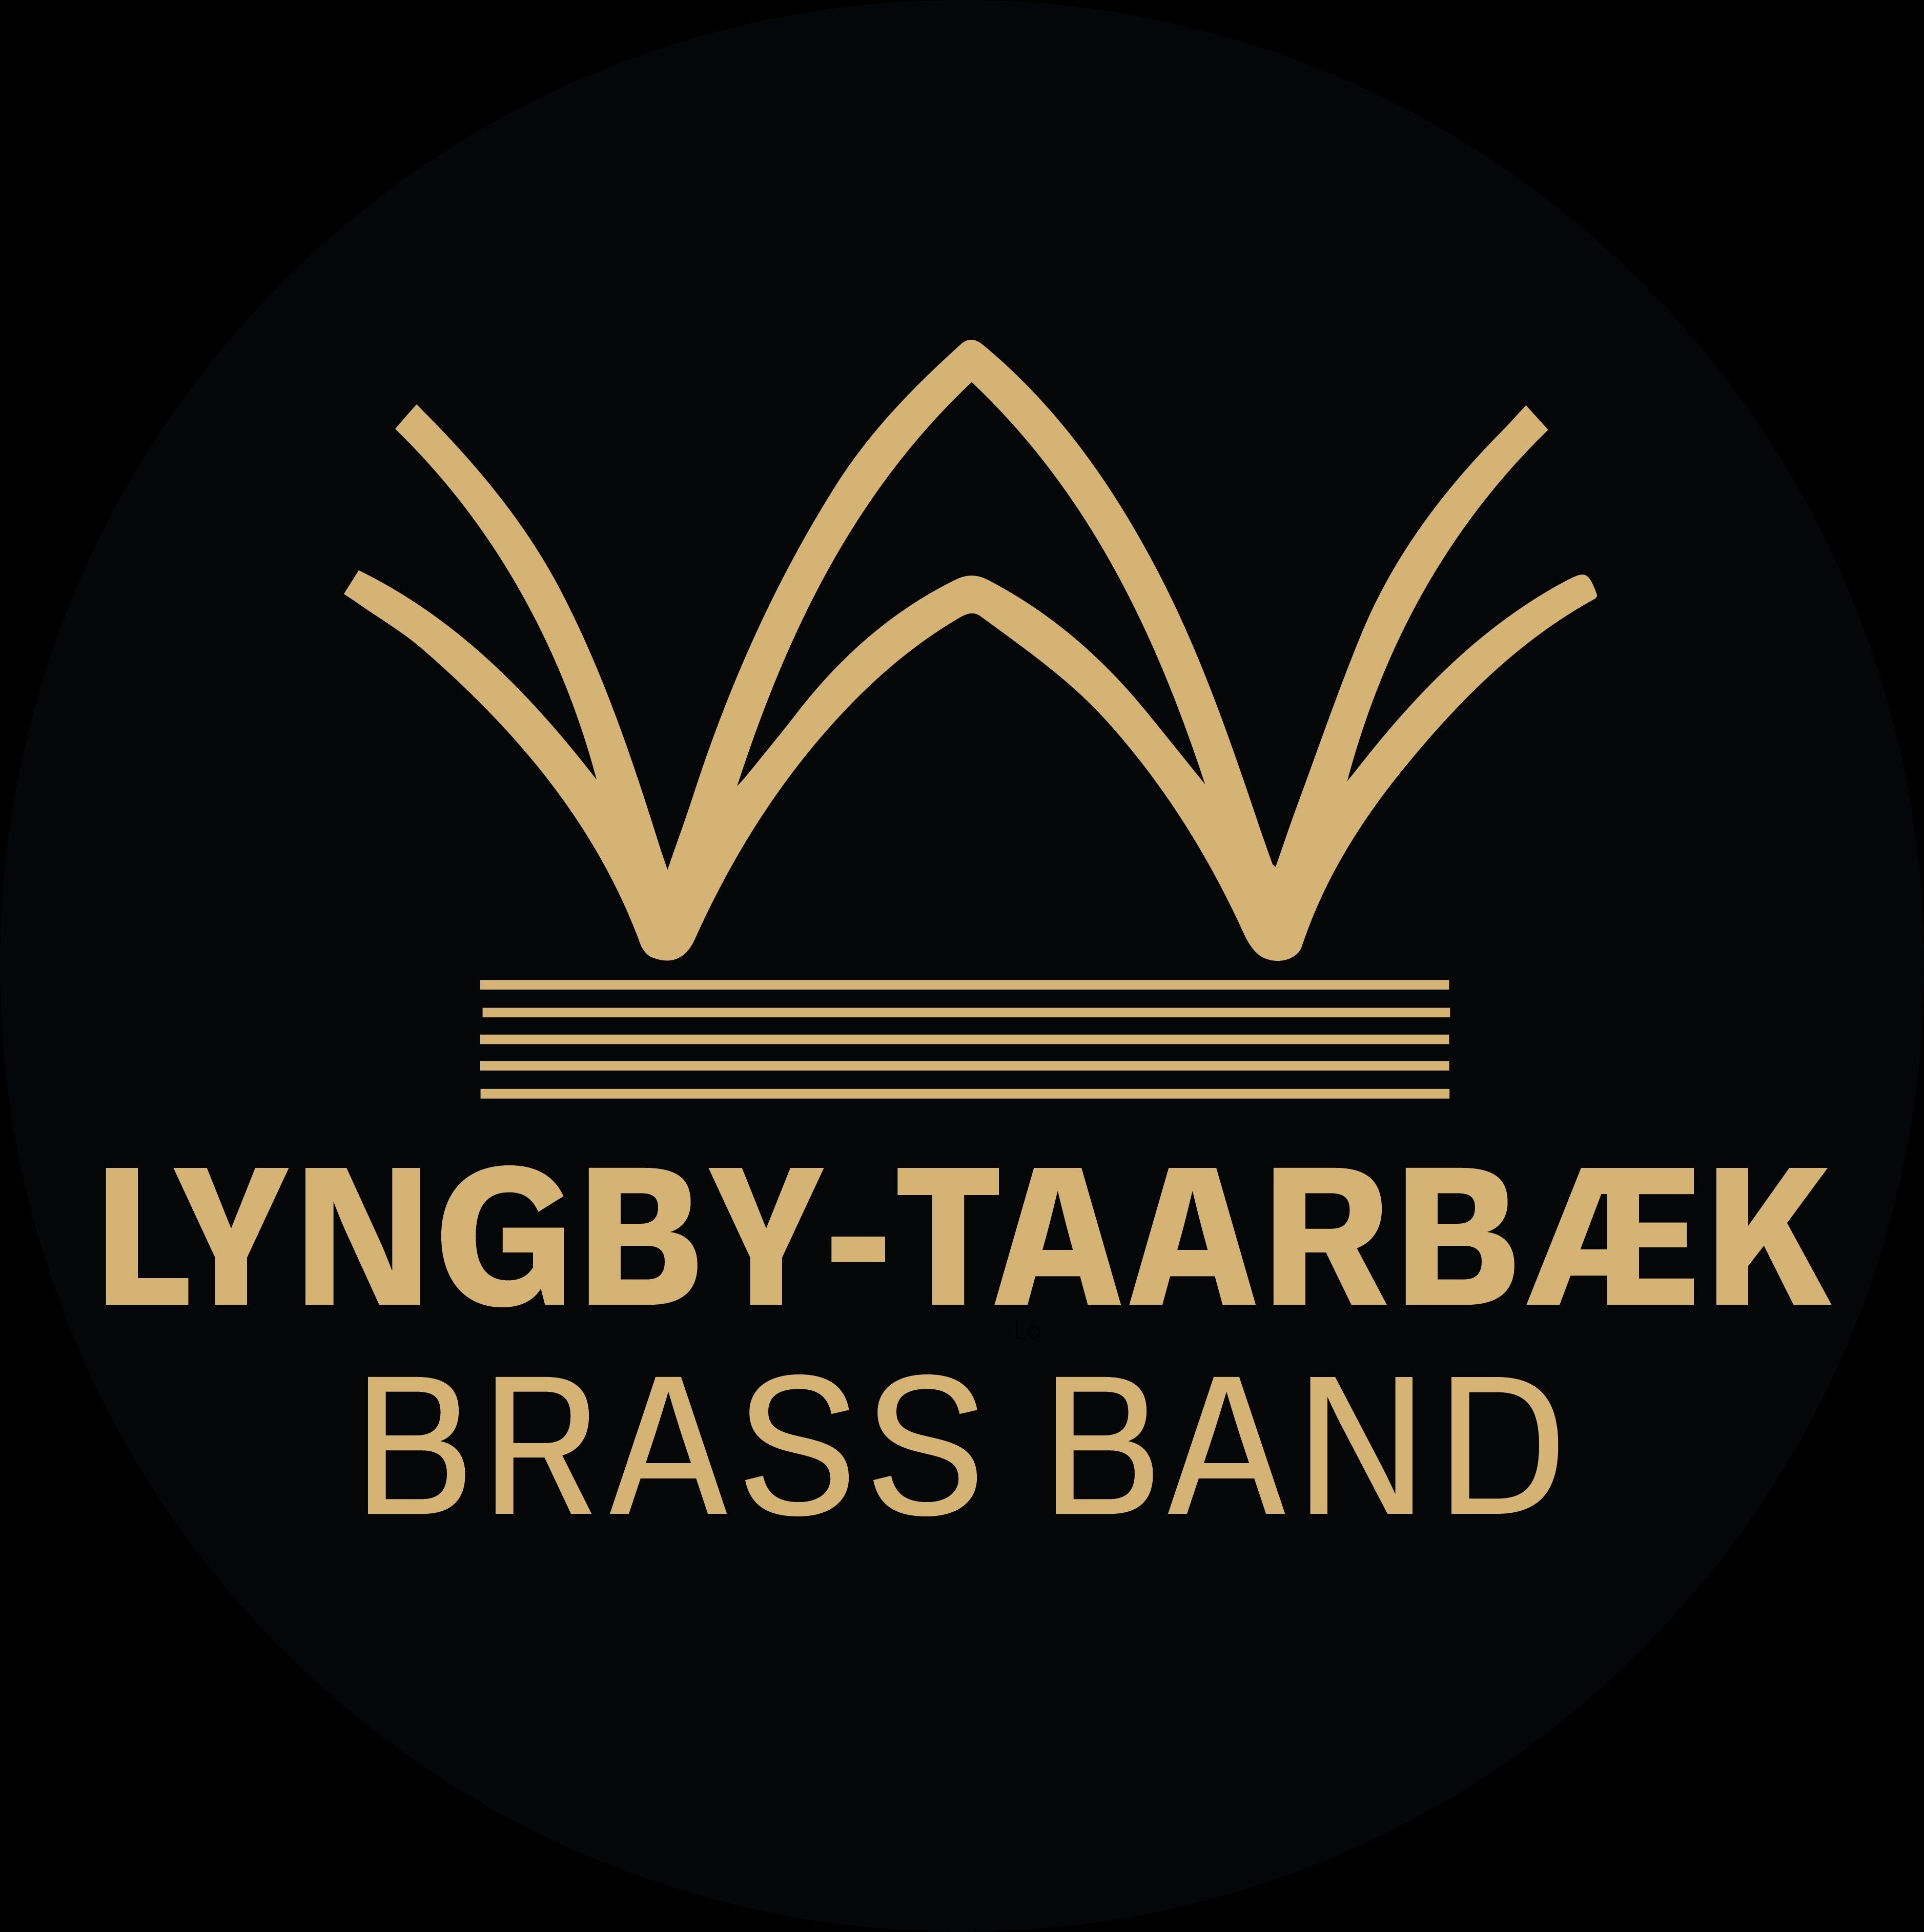 Lyngby Taarbaek Brass Band presale information on freepresalepasswords.com